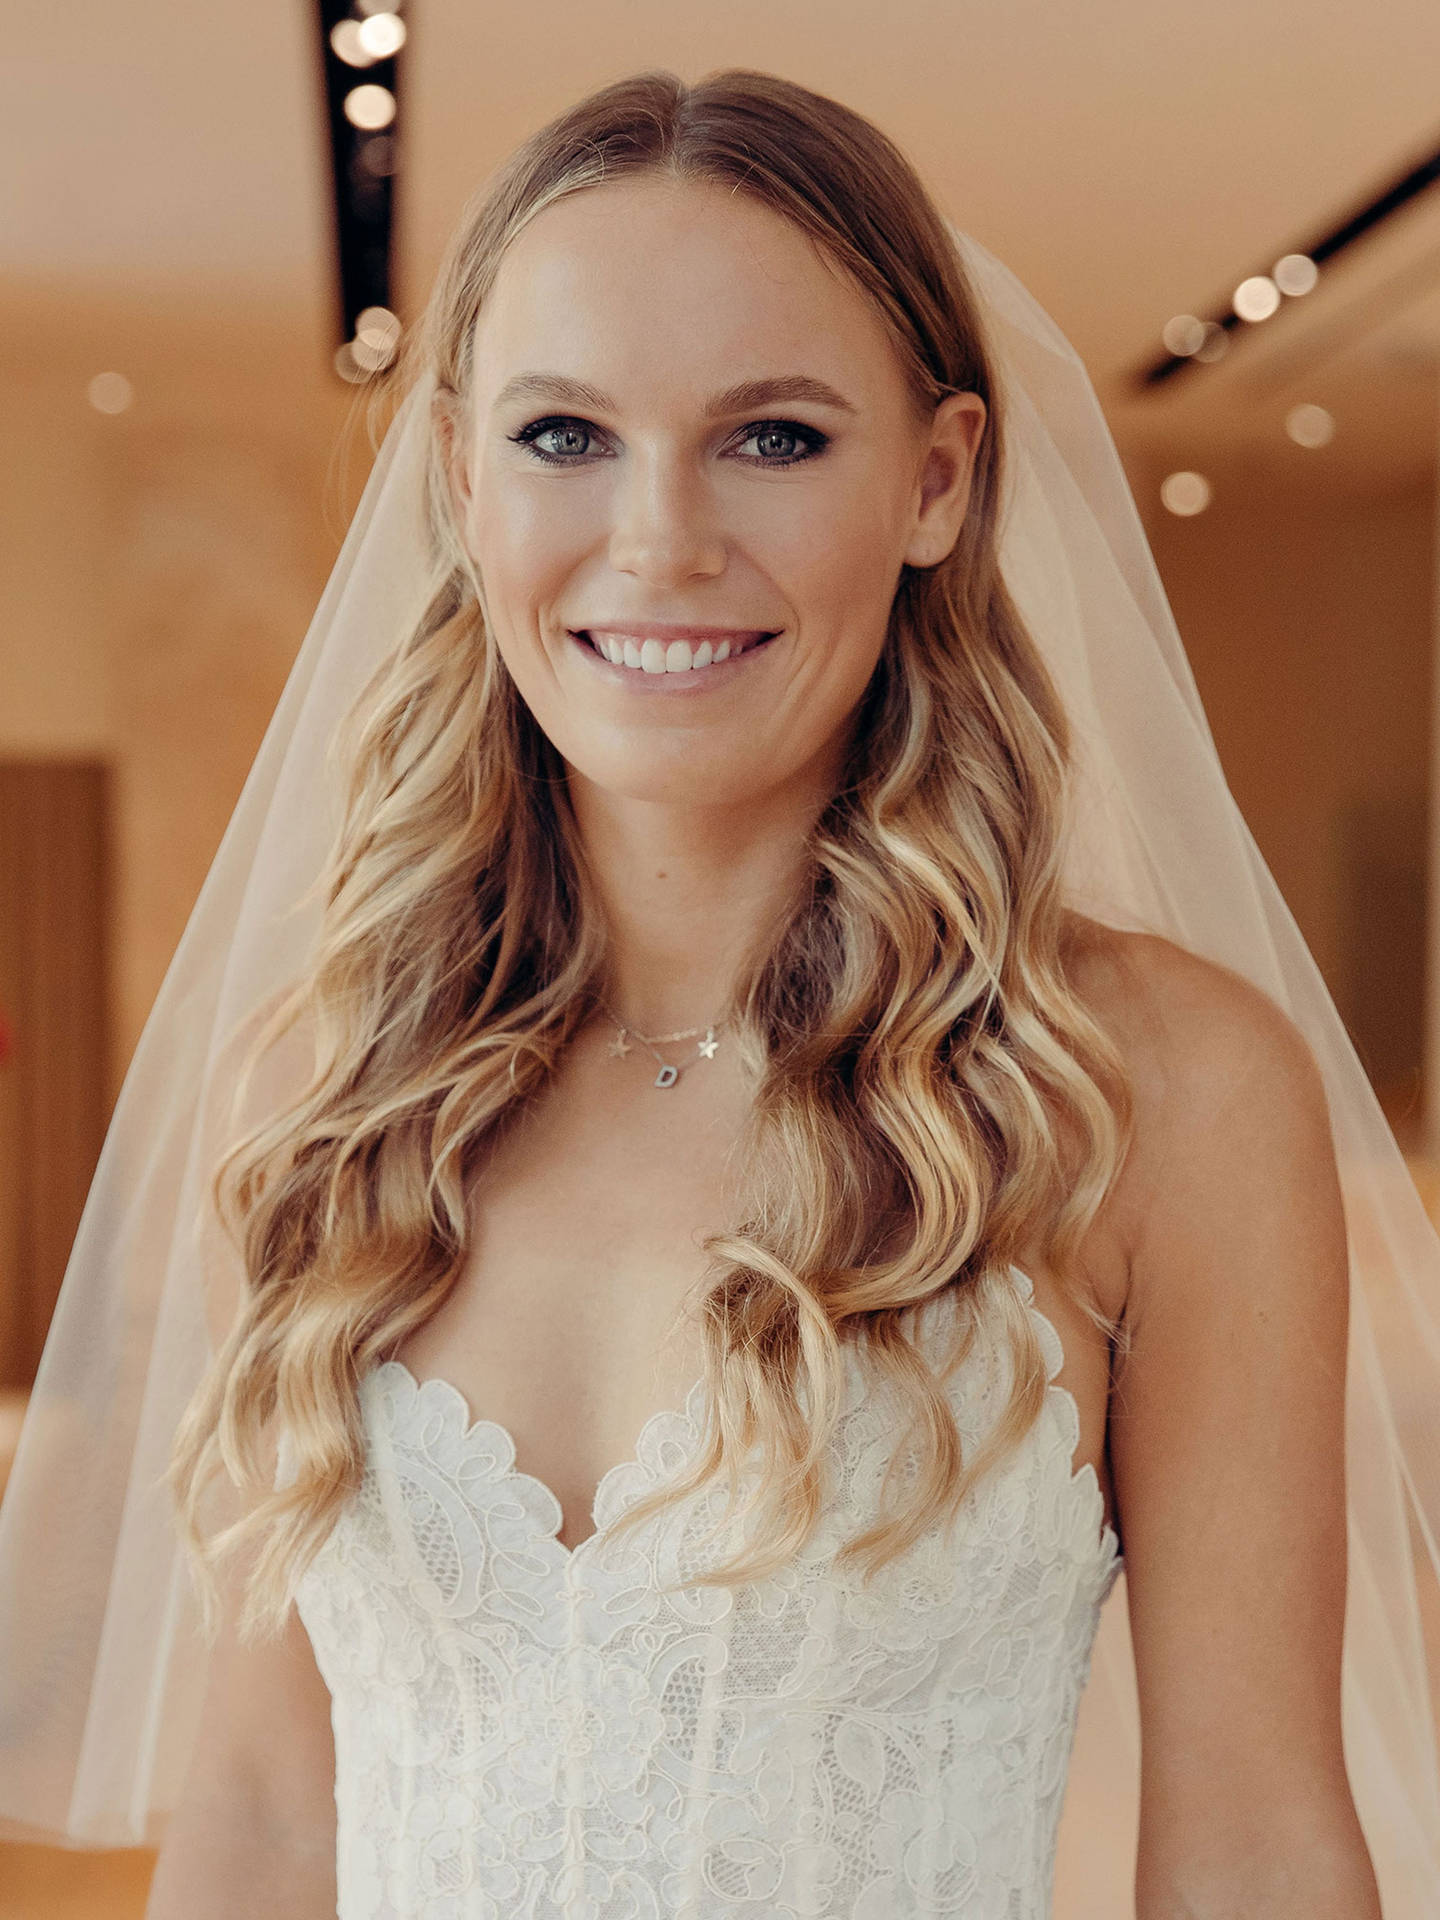 Caroline Wozniacki Wearing Wedding Dress Wallpaper